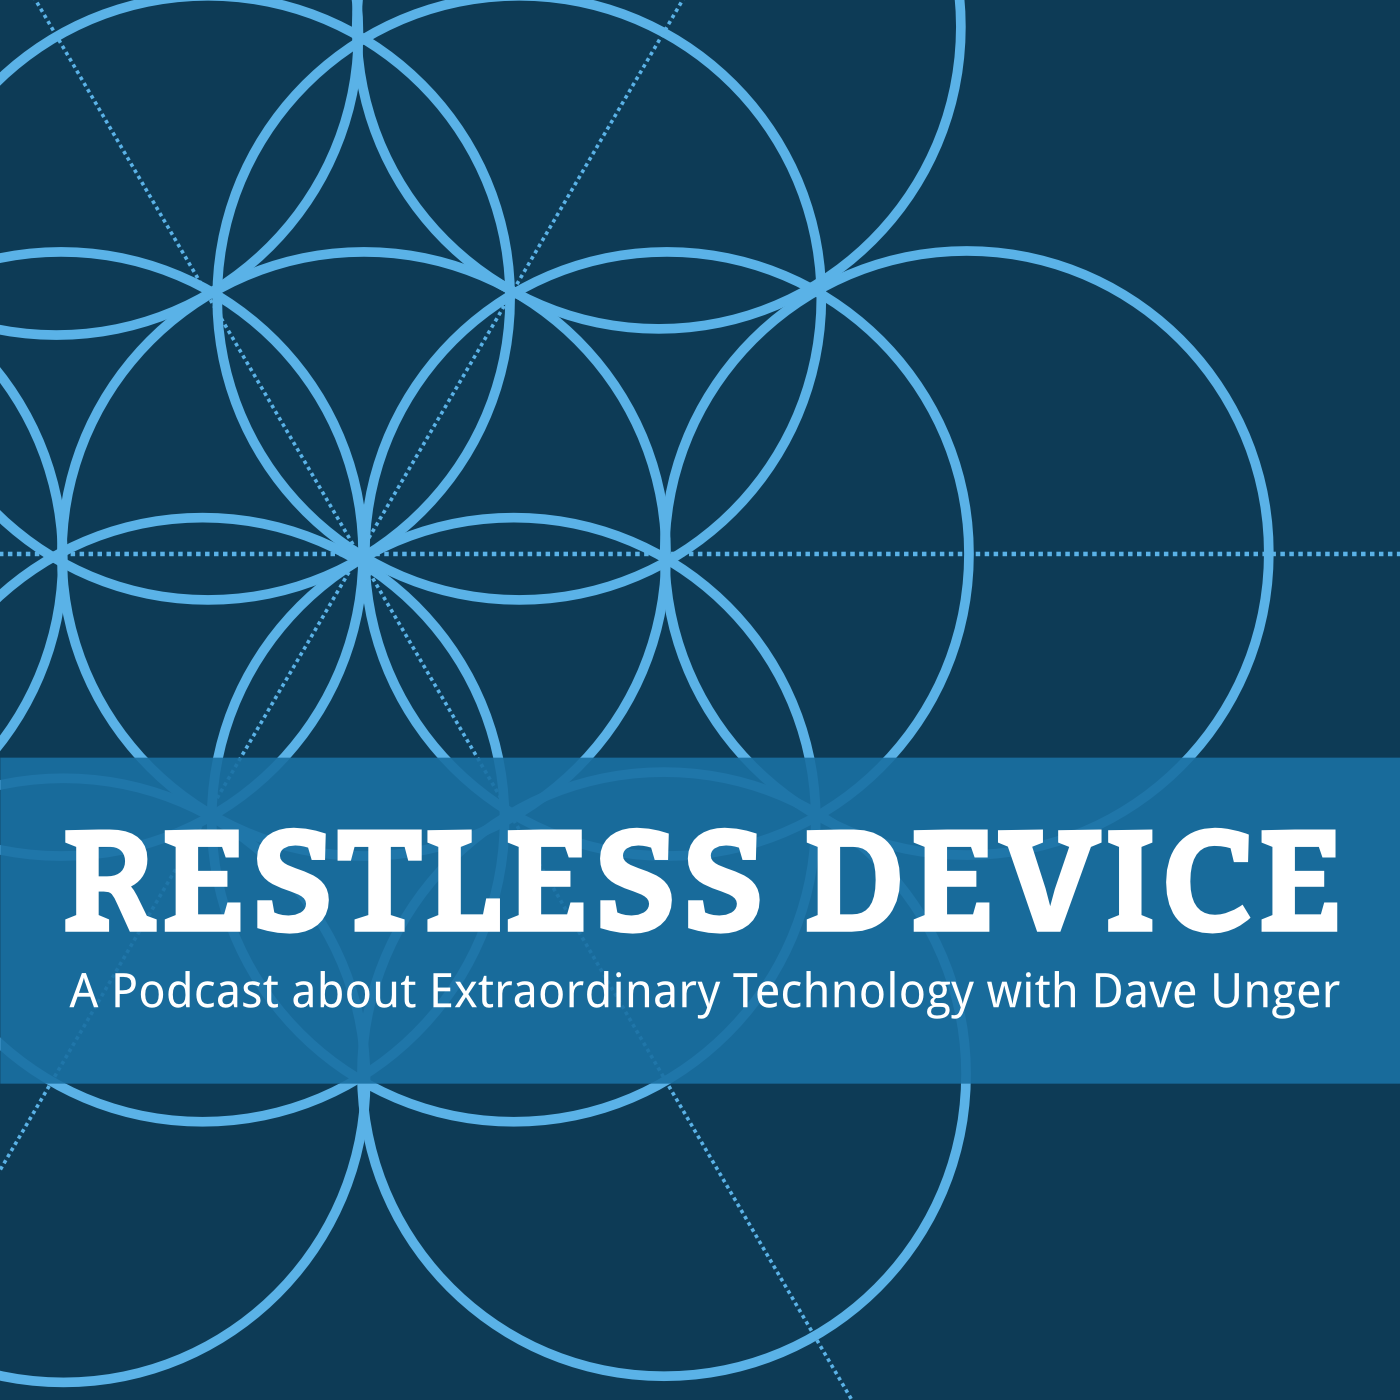 Restless Device